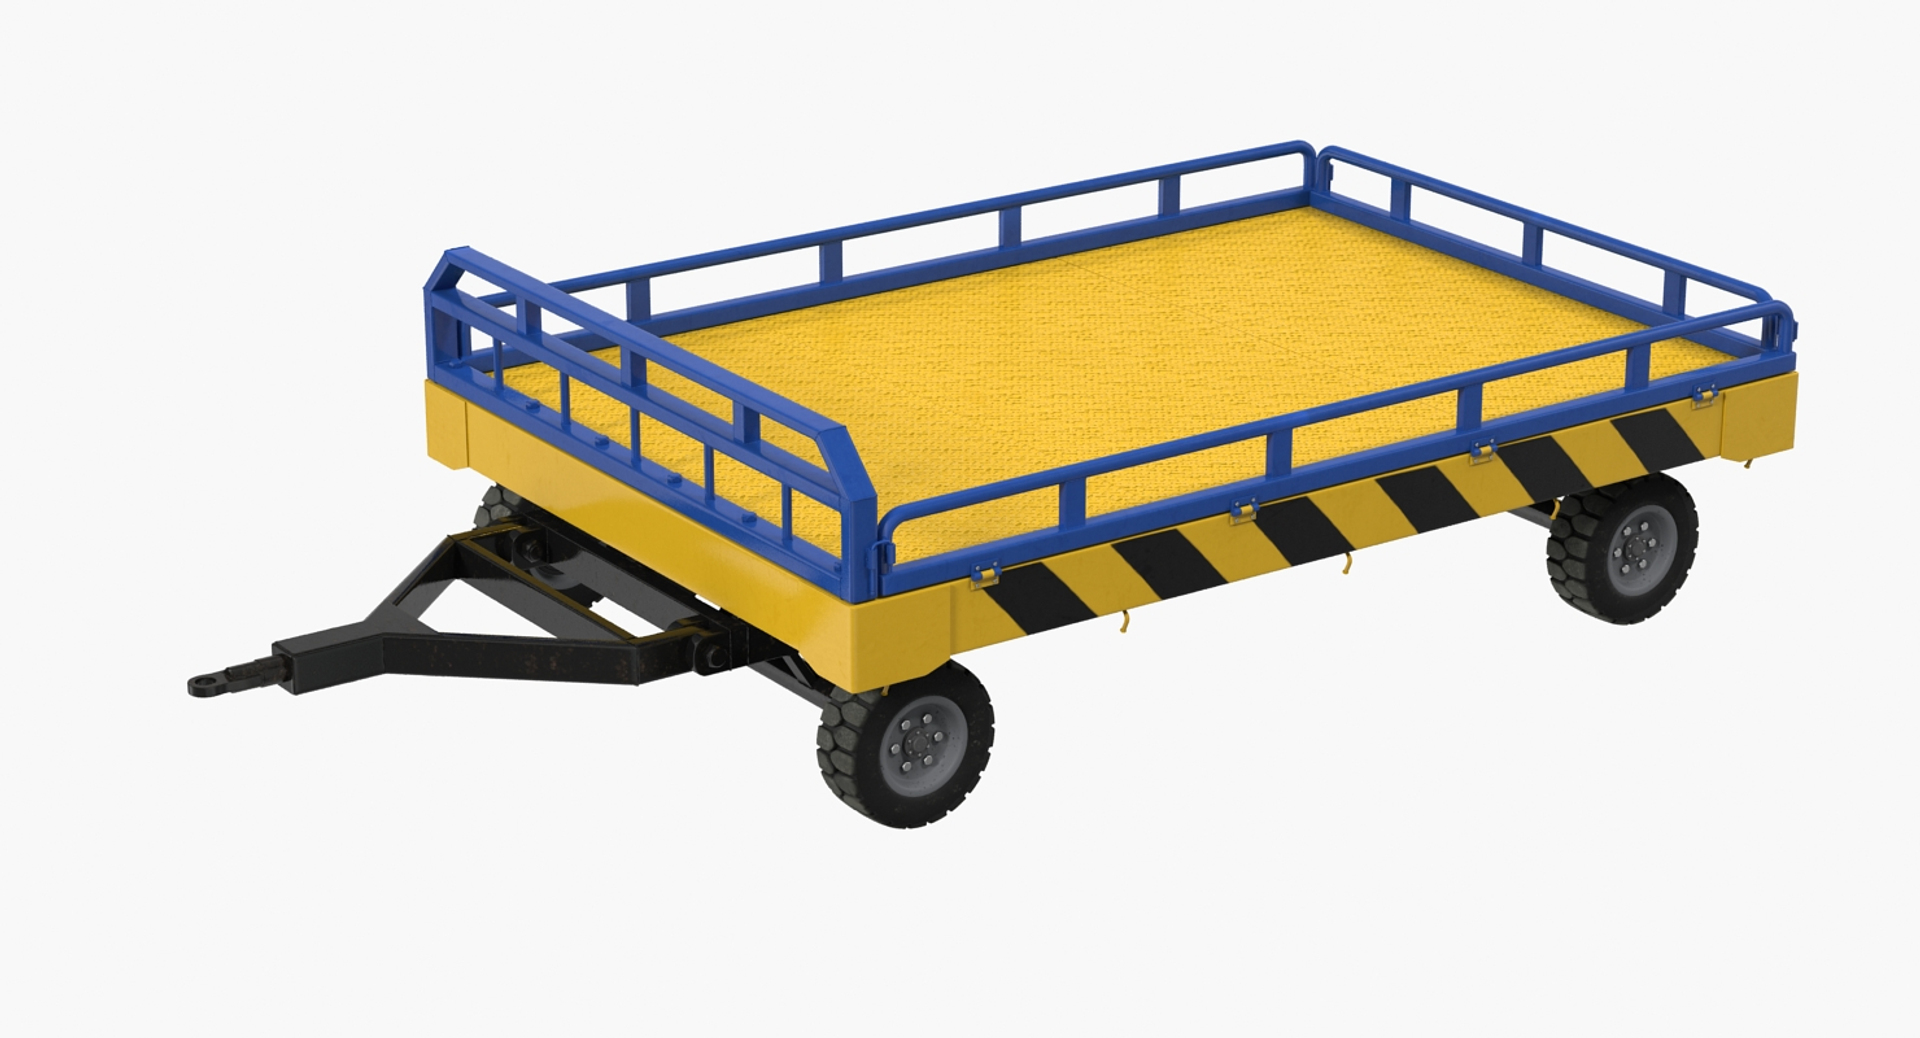 3d model airport transport trailer bed